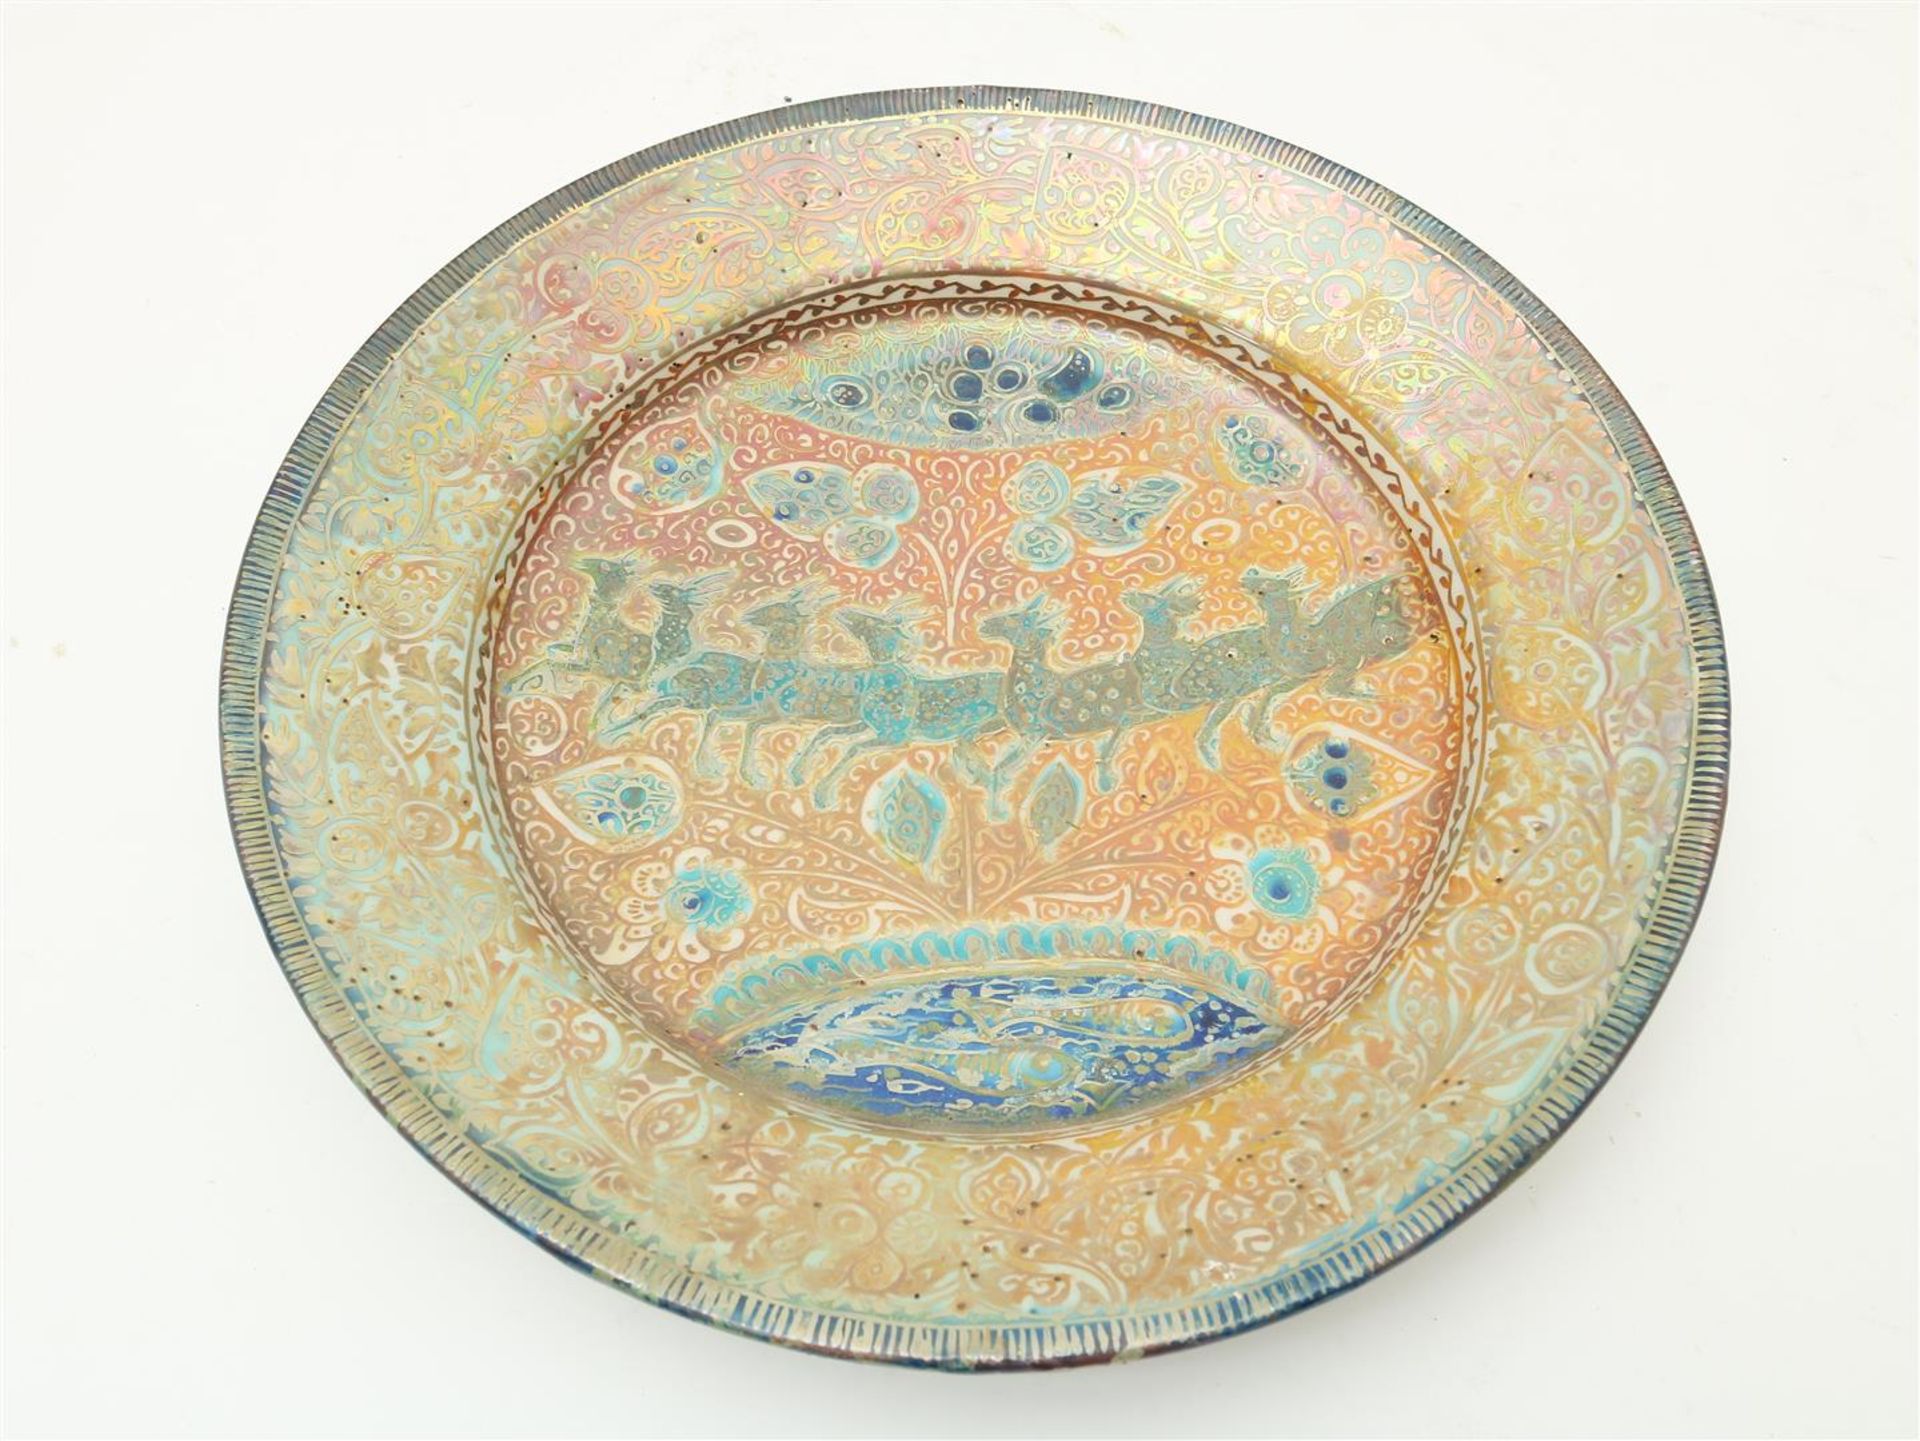 Earthenware luster glaze New Delft plate